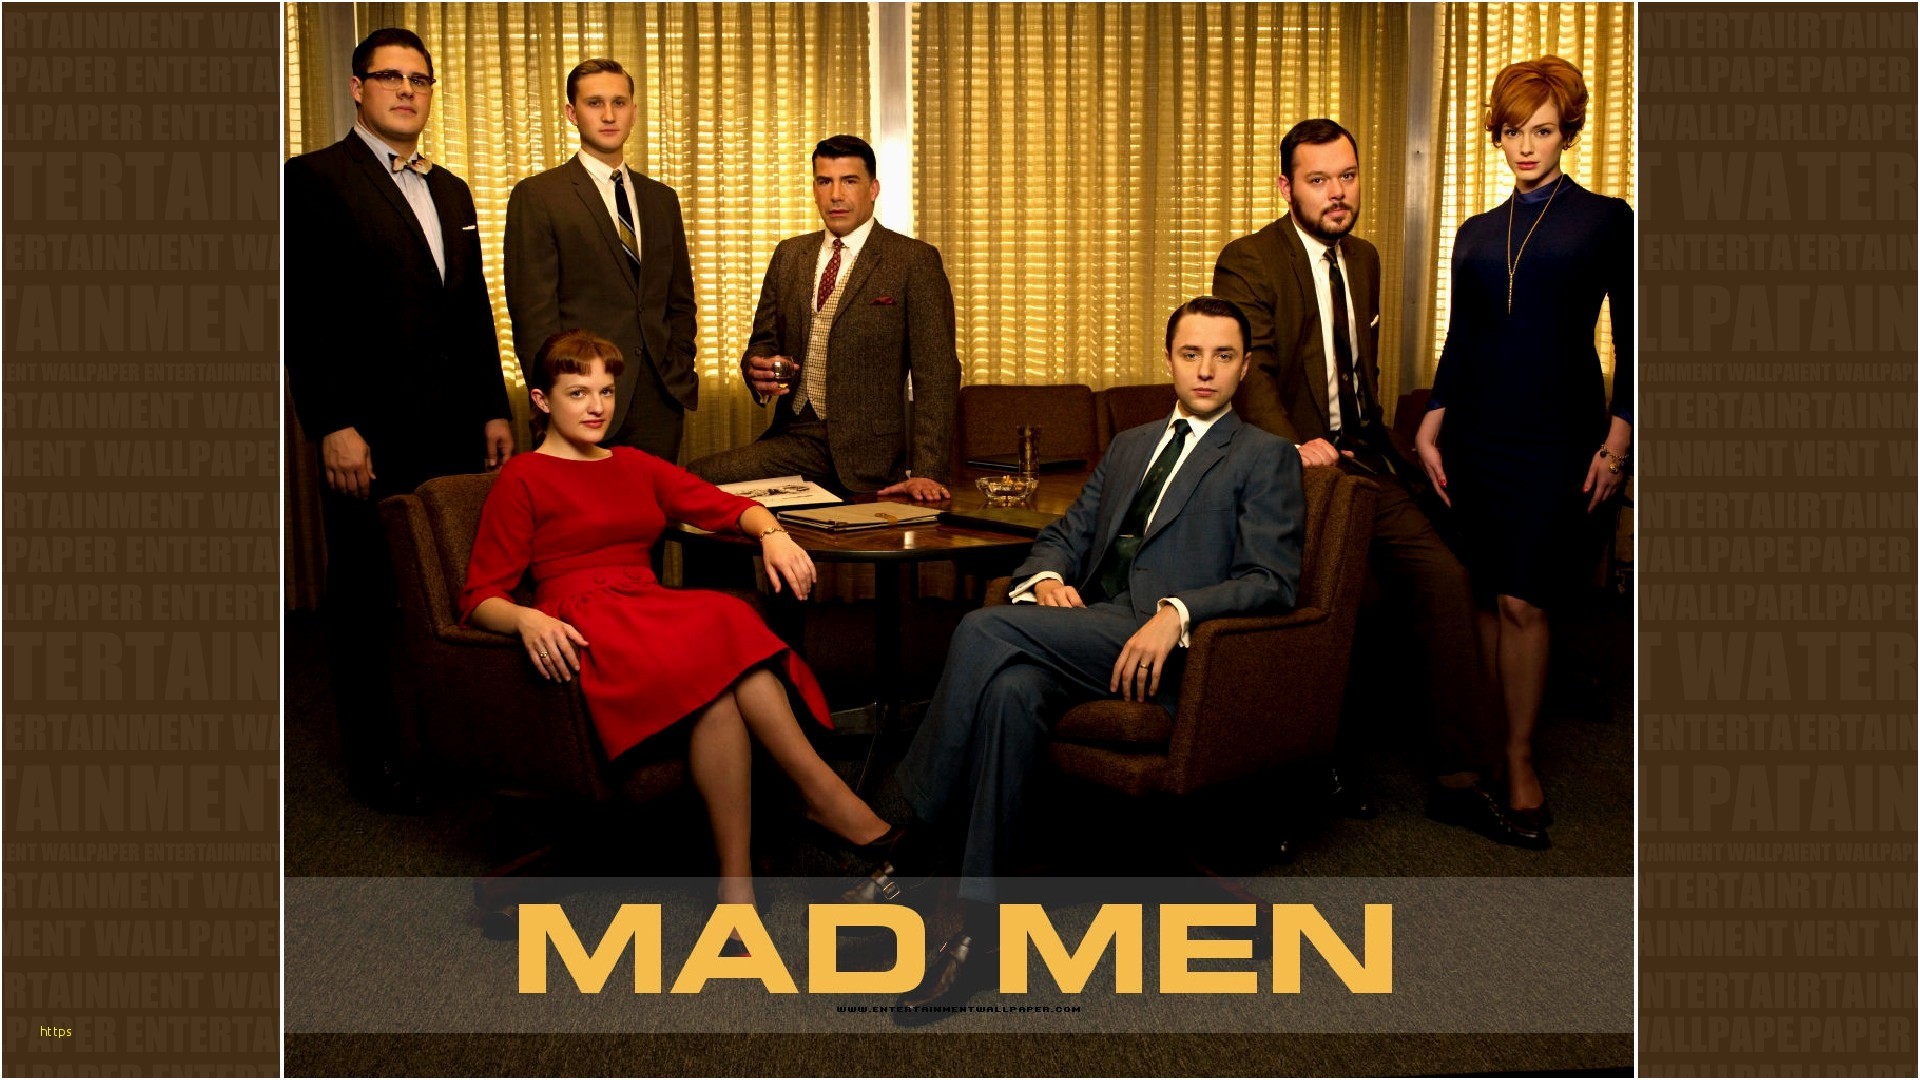 Mad Men Wallpaper Awesome Mad Men Wallpaper 
 Data - Mad Men - HD Wallpaper 